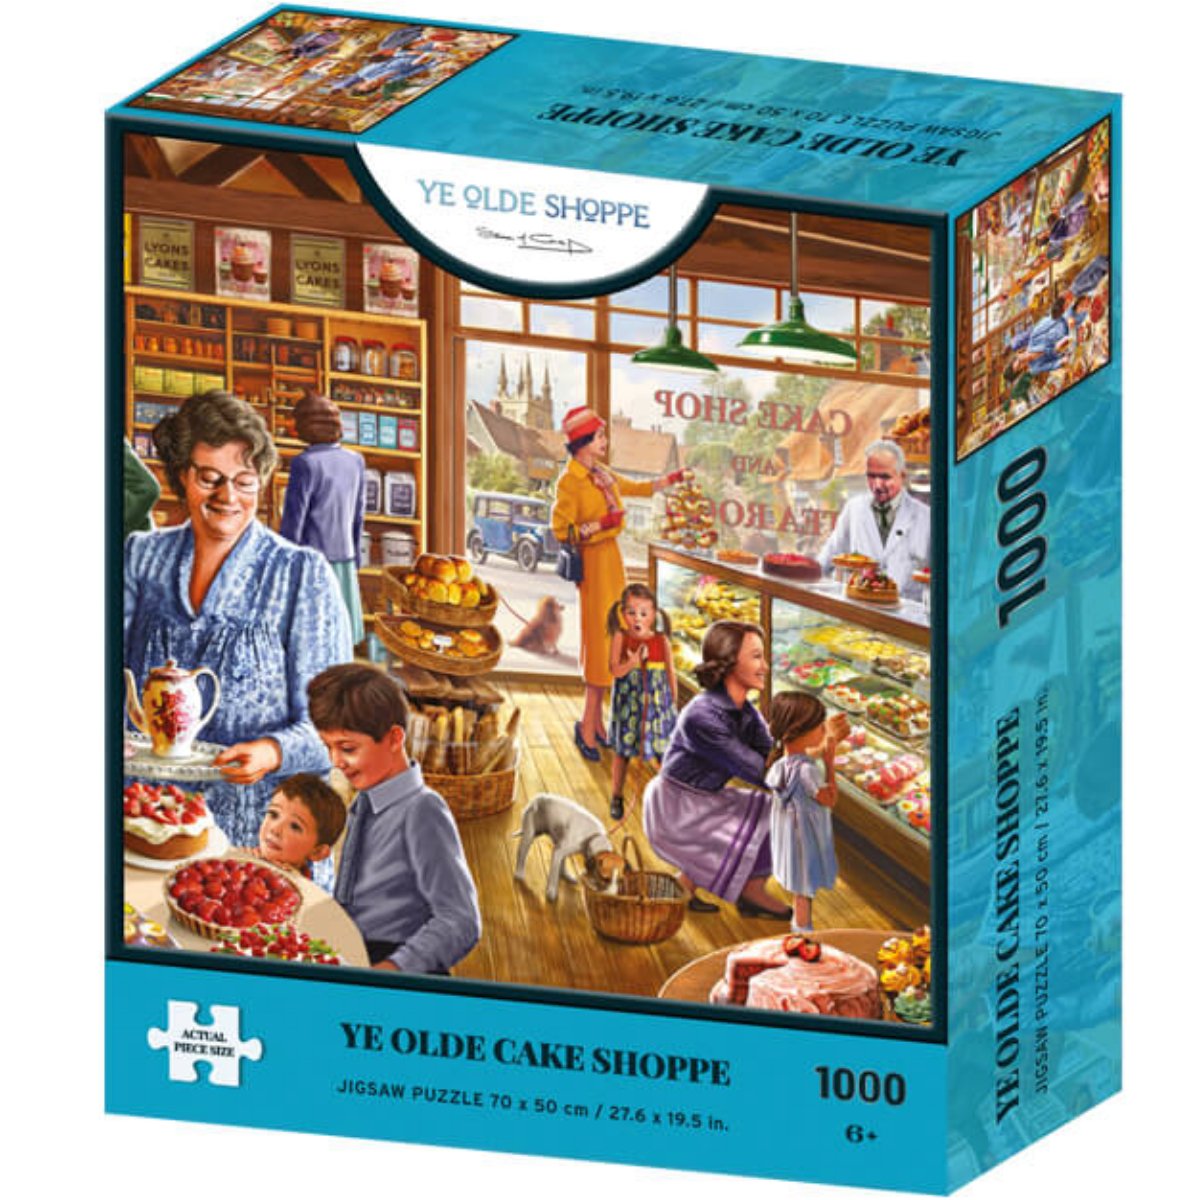 Ye Olde Cake Shoppe Jigsaw Puzzle (1000 Pieces) - Phillips Hobbies